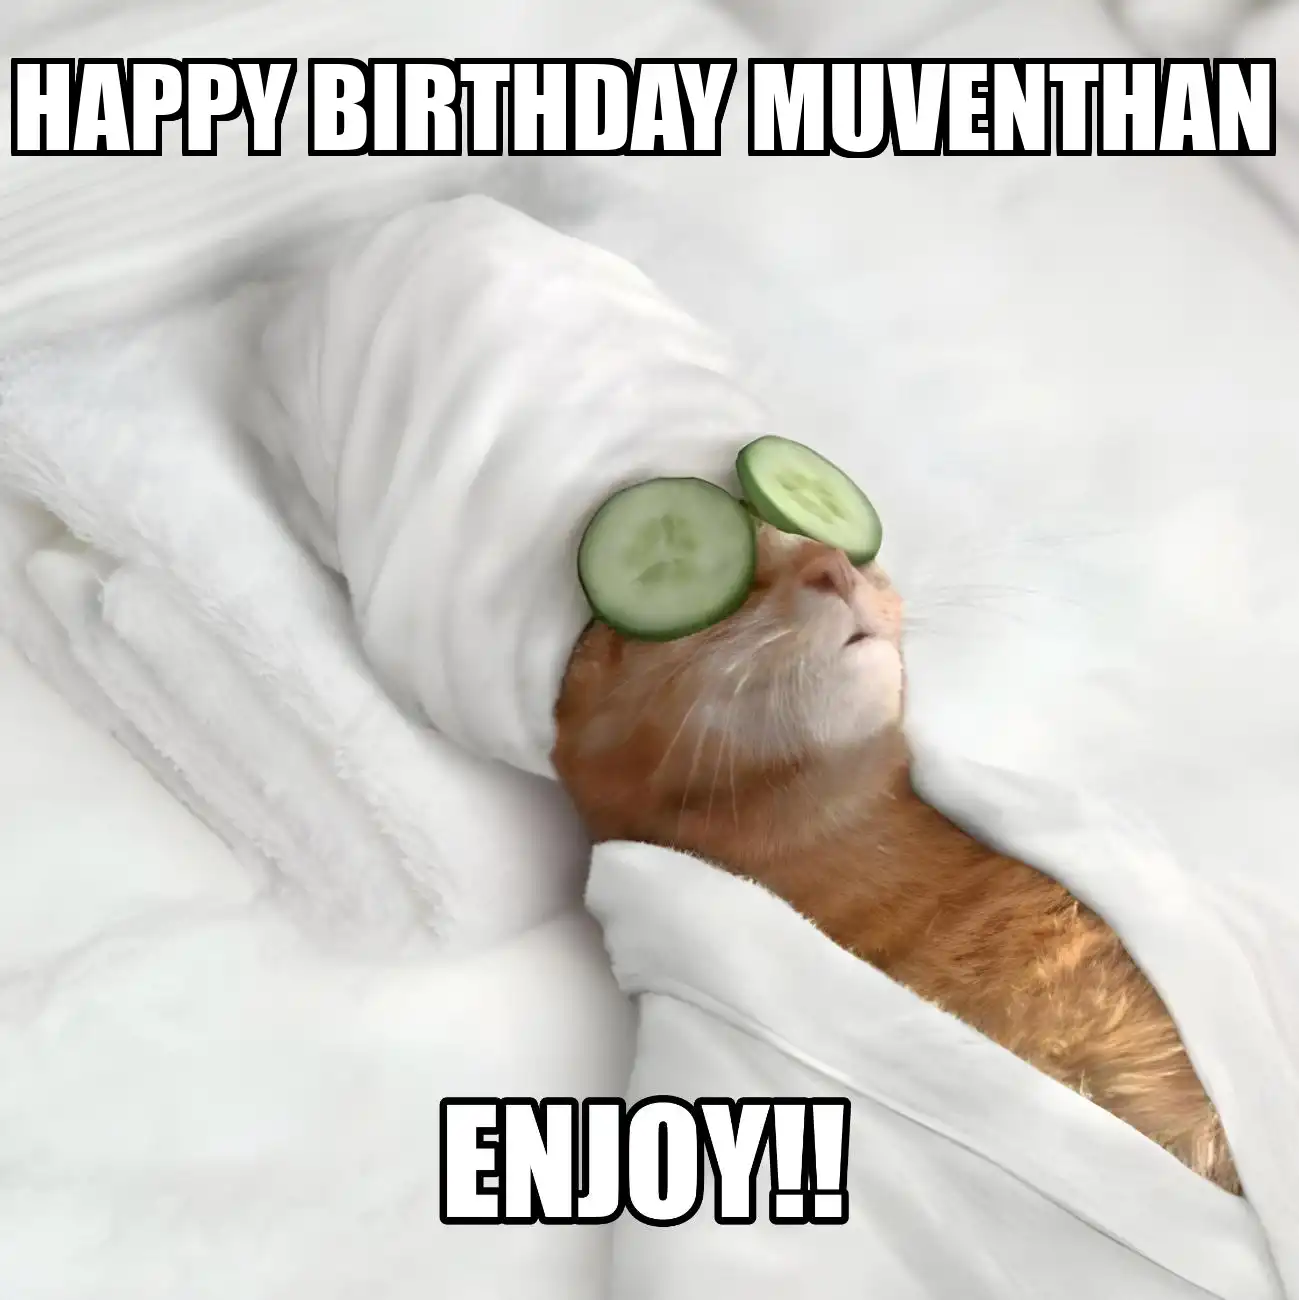 Happy Birthday Muventhan Enjoy Cat Meme